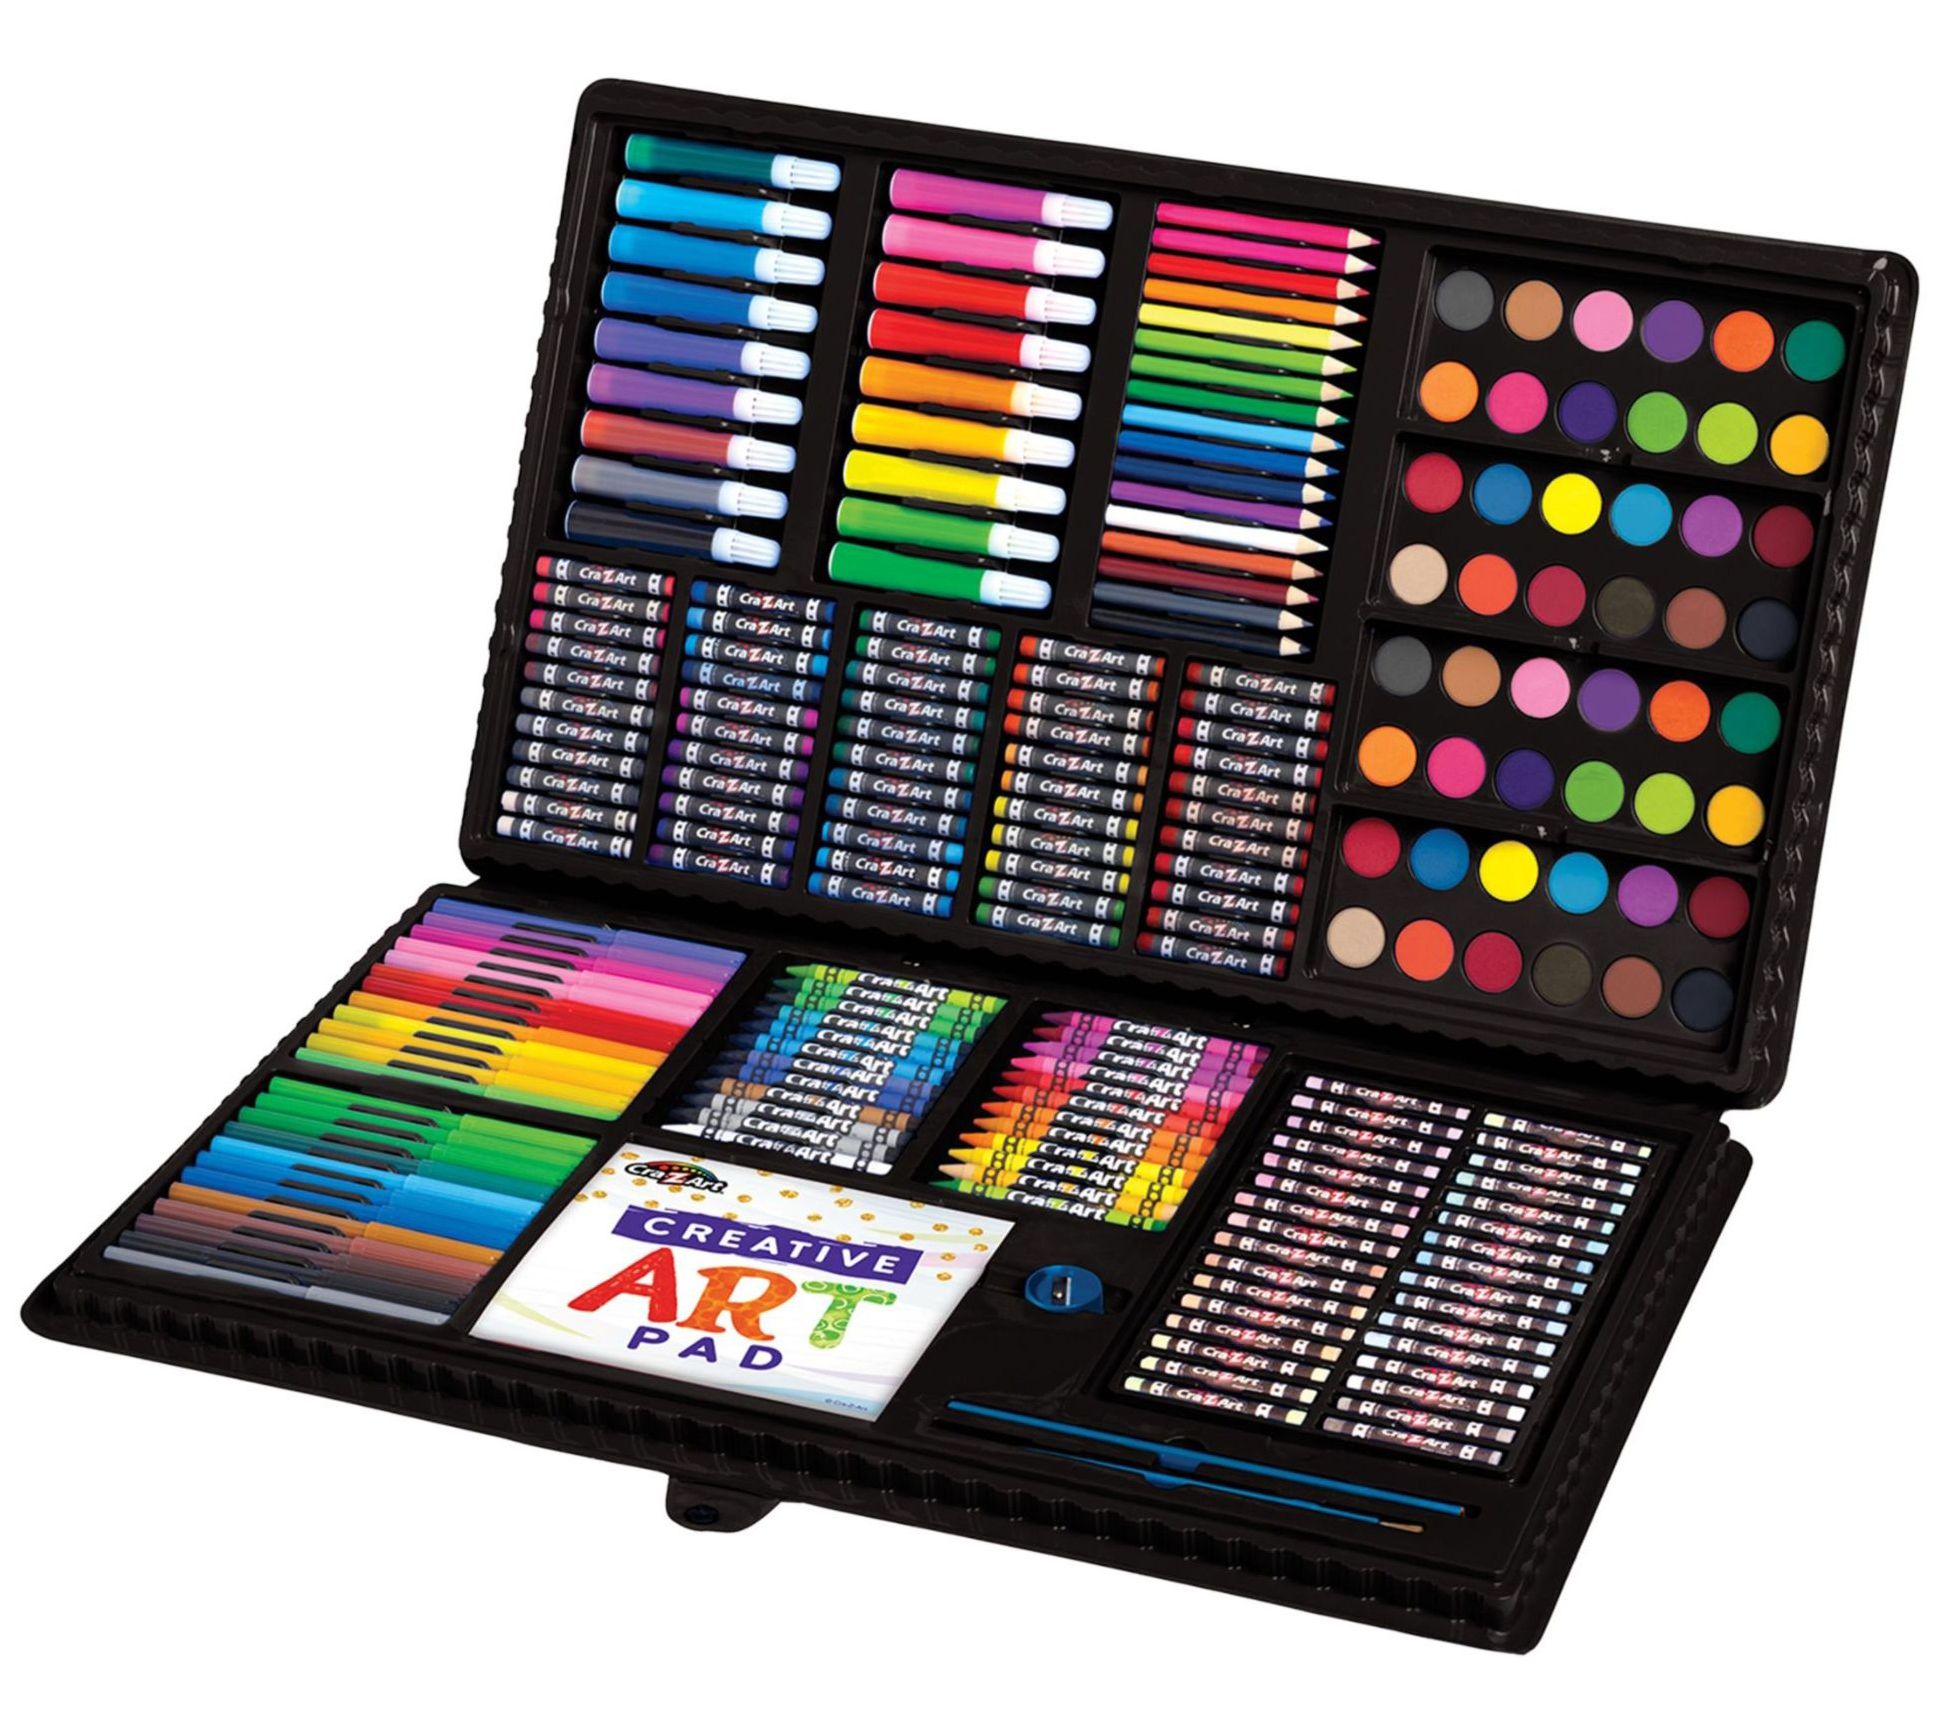 Cra-z-art Colored Pencils 24 Pencils Pencils for Crafts, Puzzles, Projects  